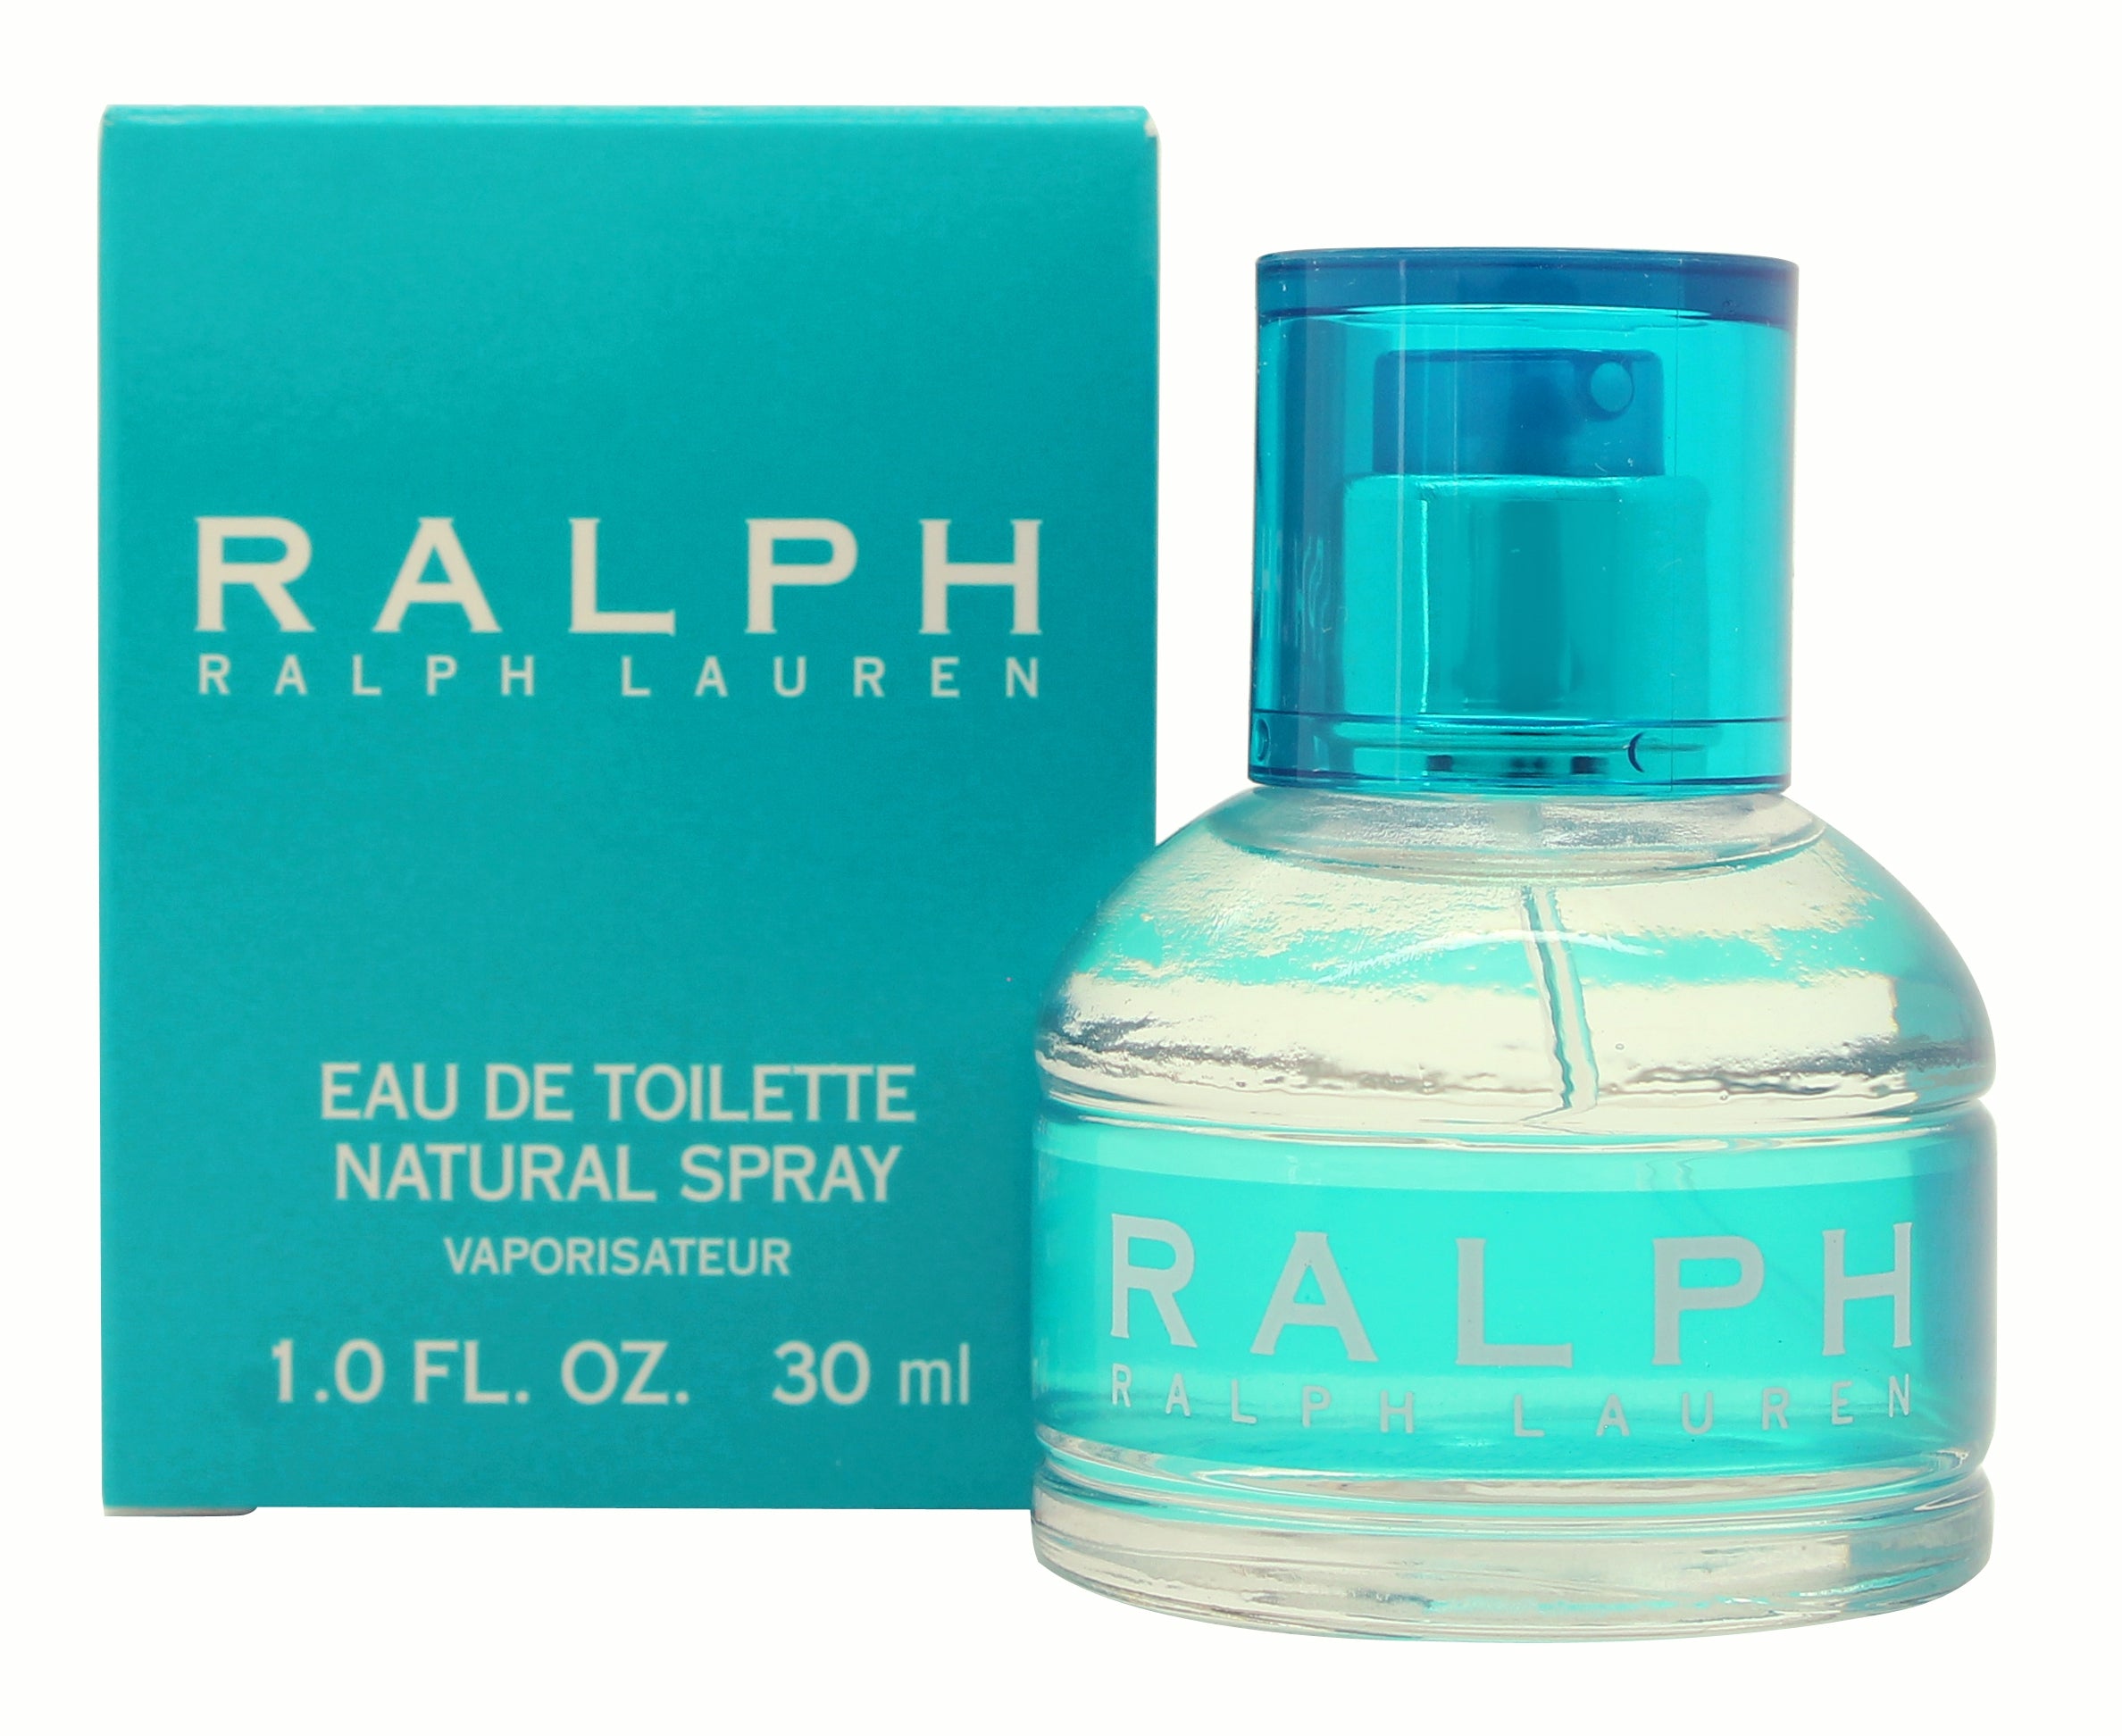 View Ralph Lauren Ralph Eau de Toilette 30ml Spray information